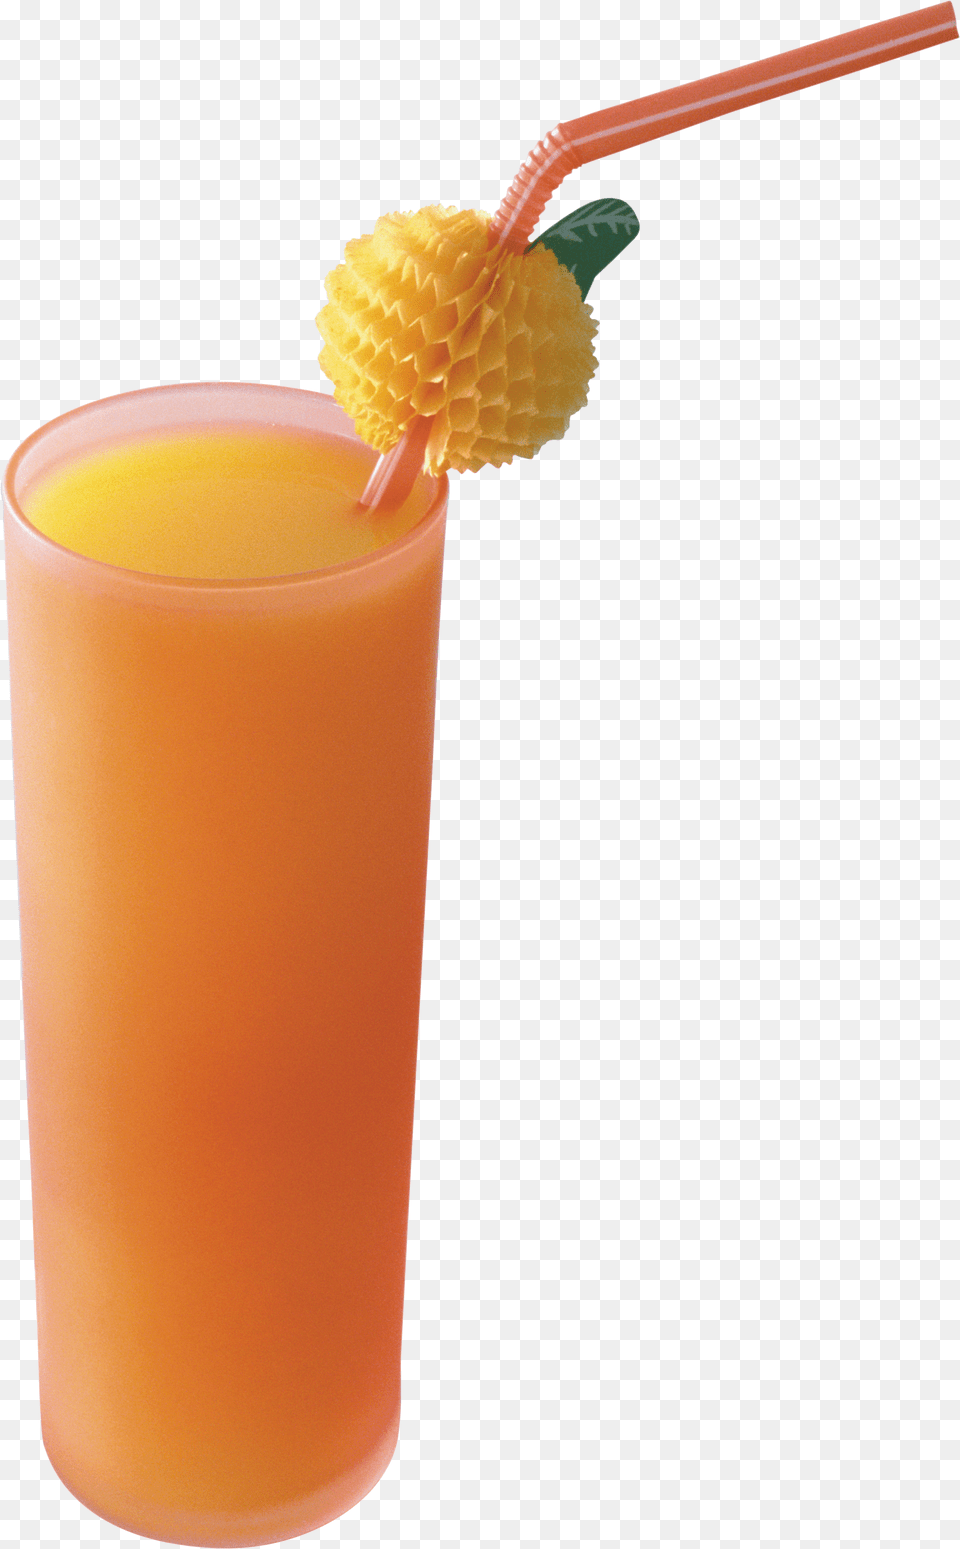 Juice Image Juice Beach, Beverage, Orange Juice Free Png Download